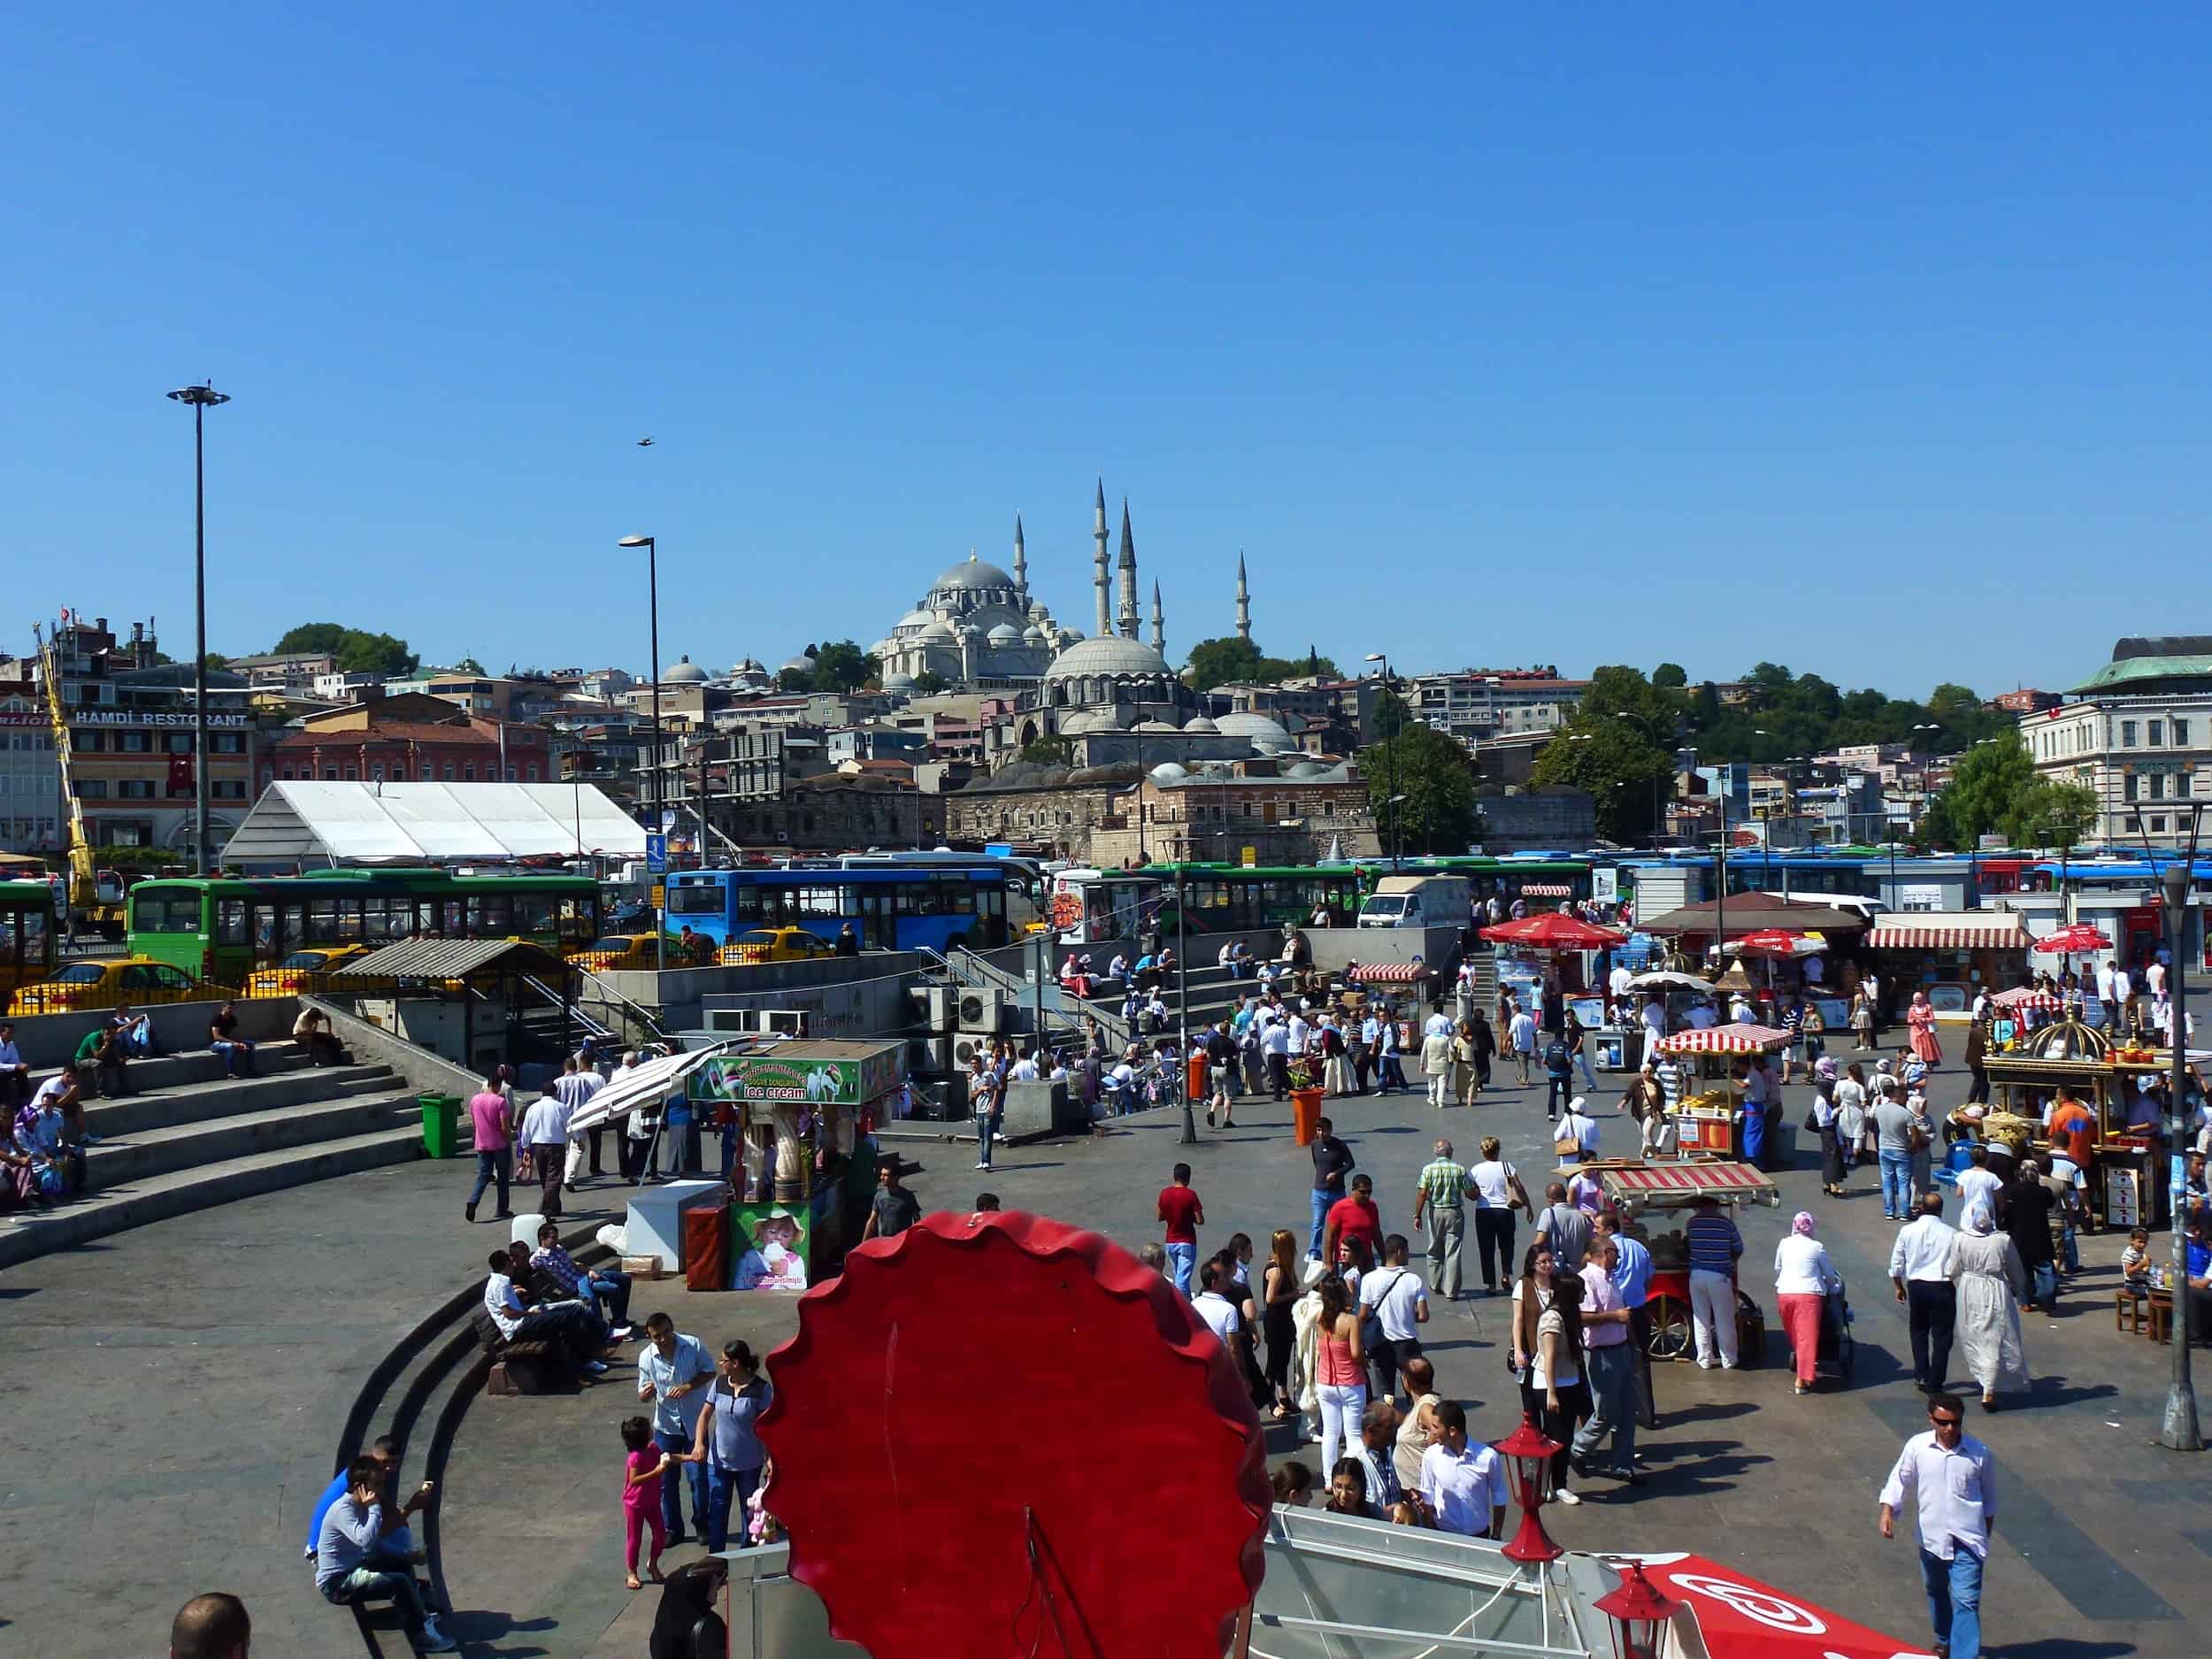 Eminönü Pier in Eminönü, Istanbul, Turkey